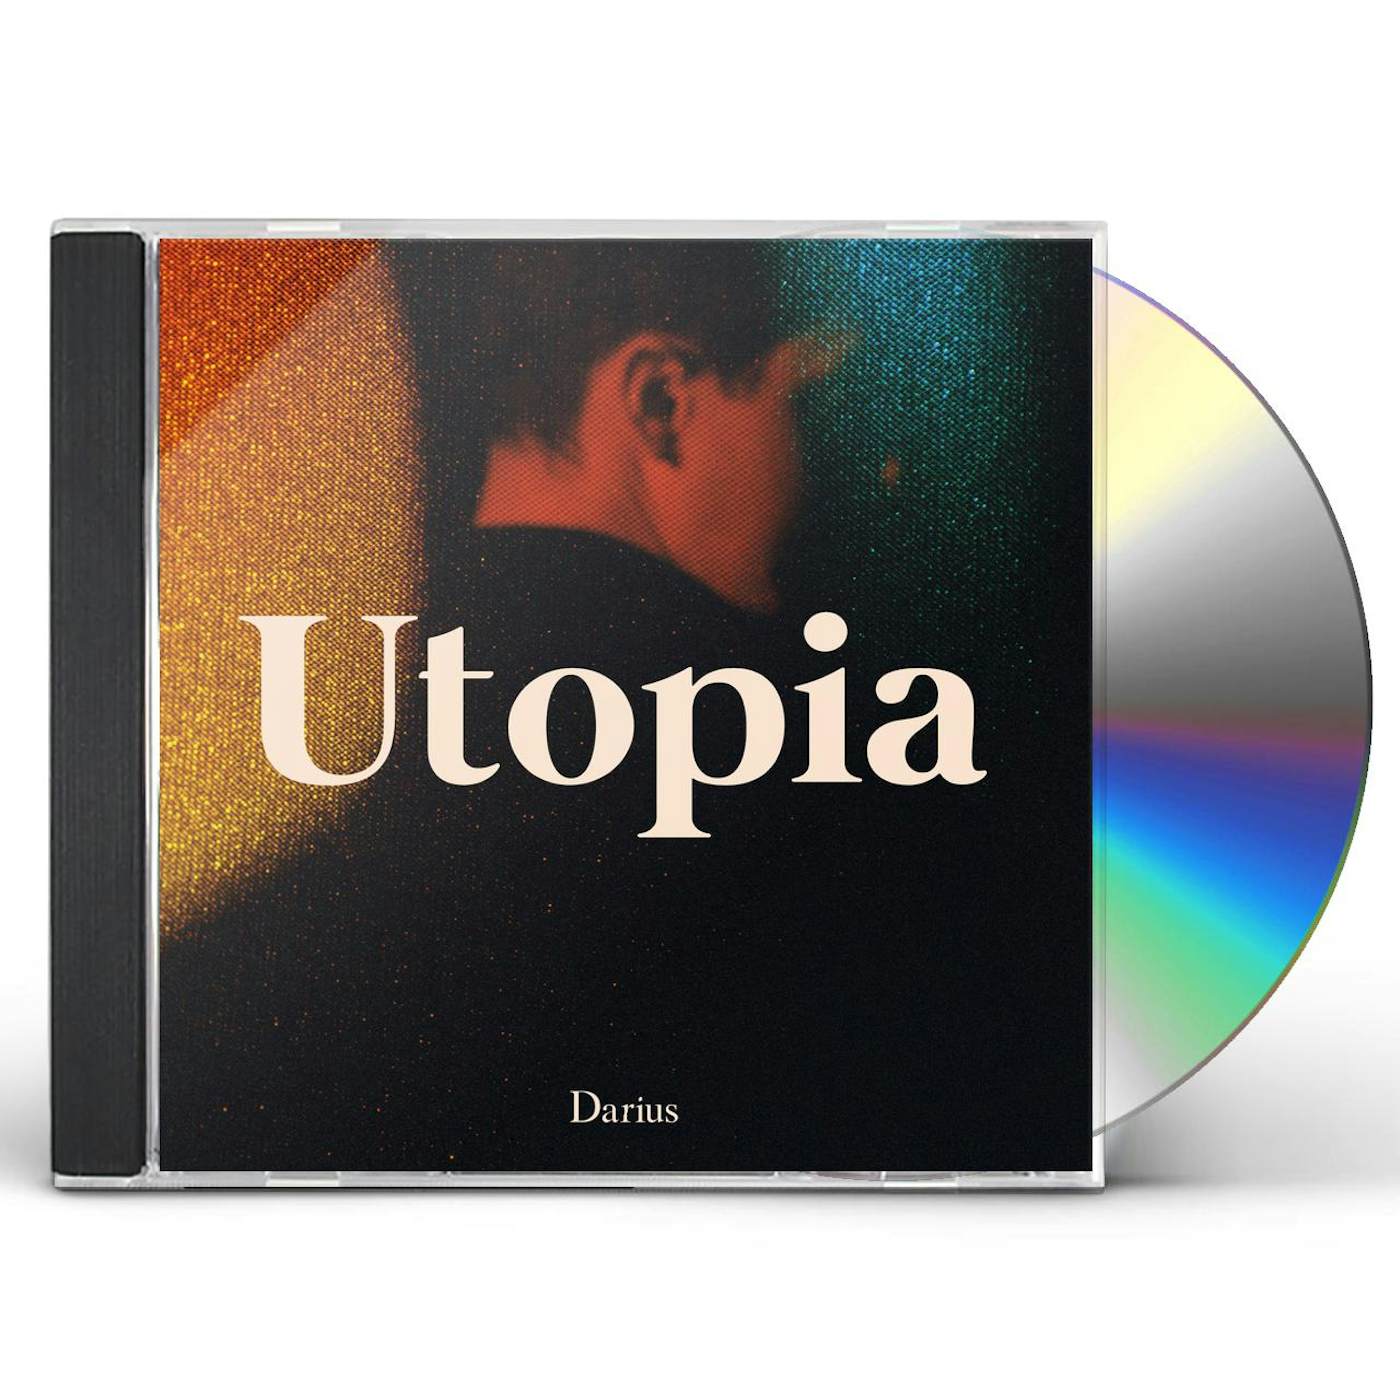 UTOPIA CD COVER 1